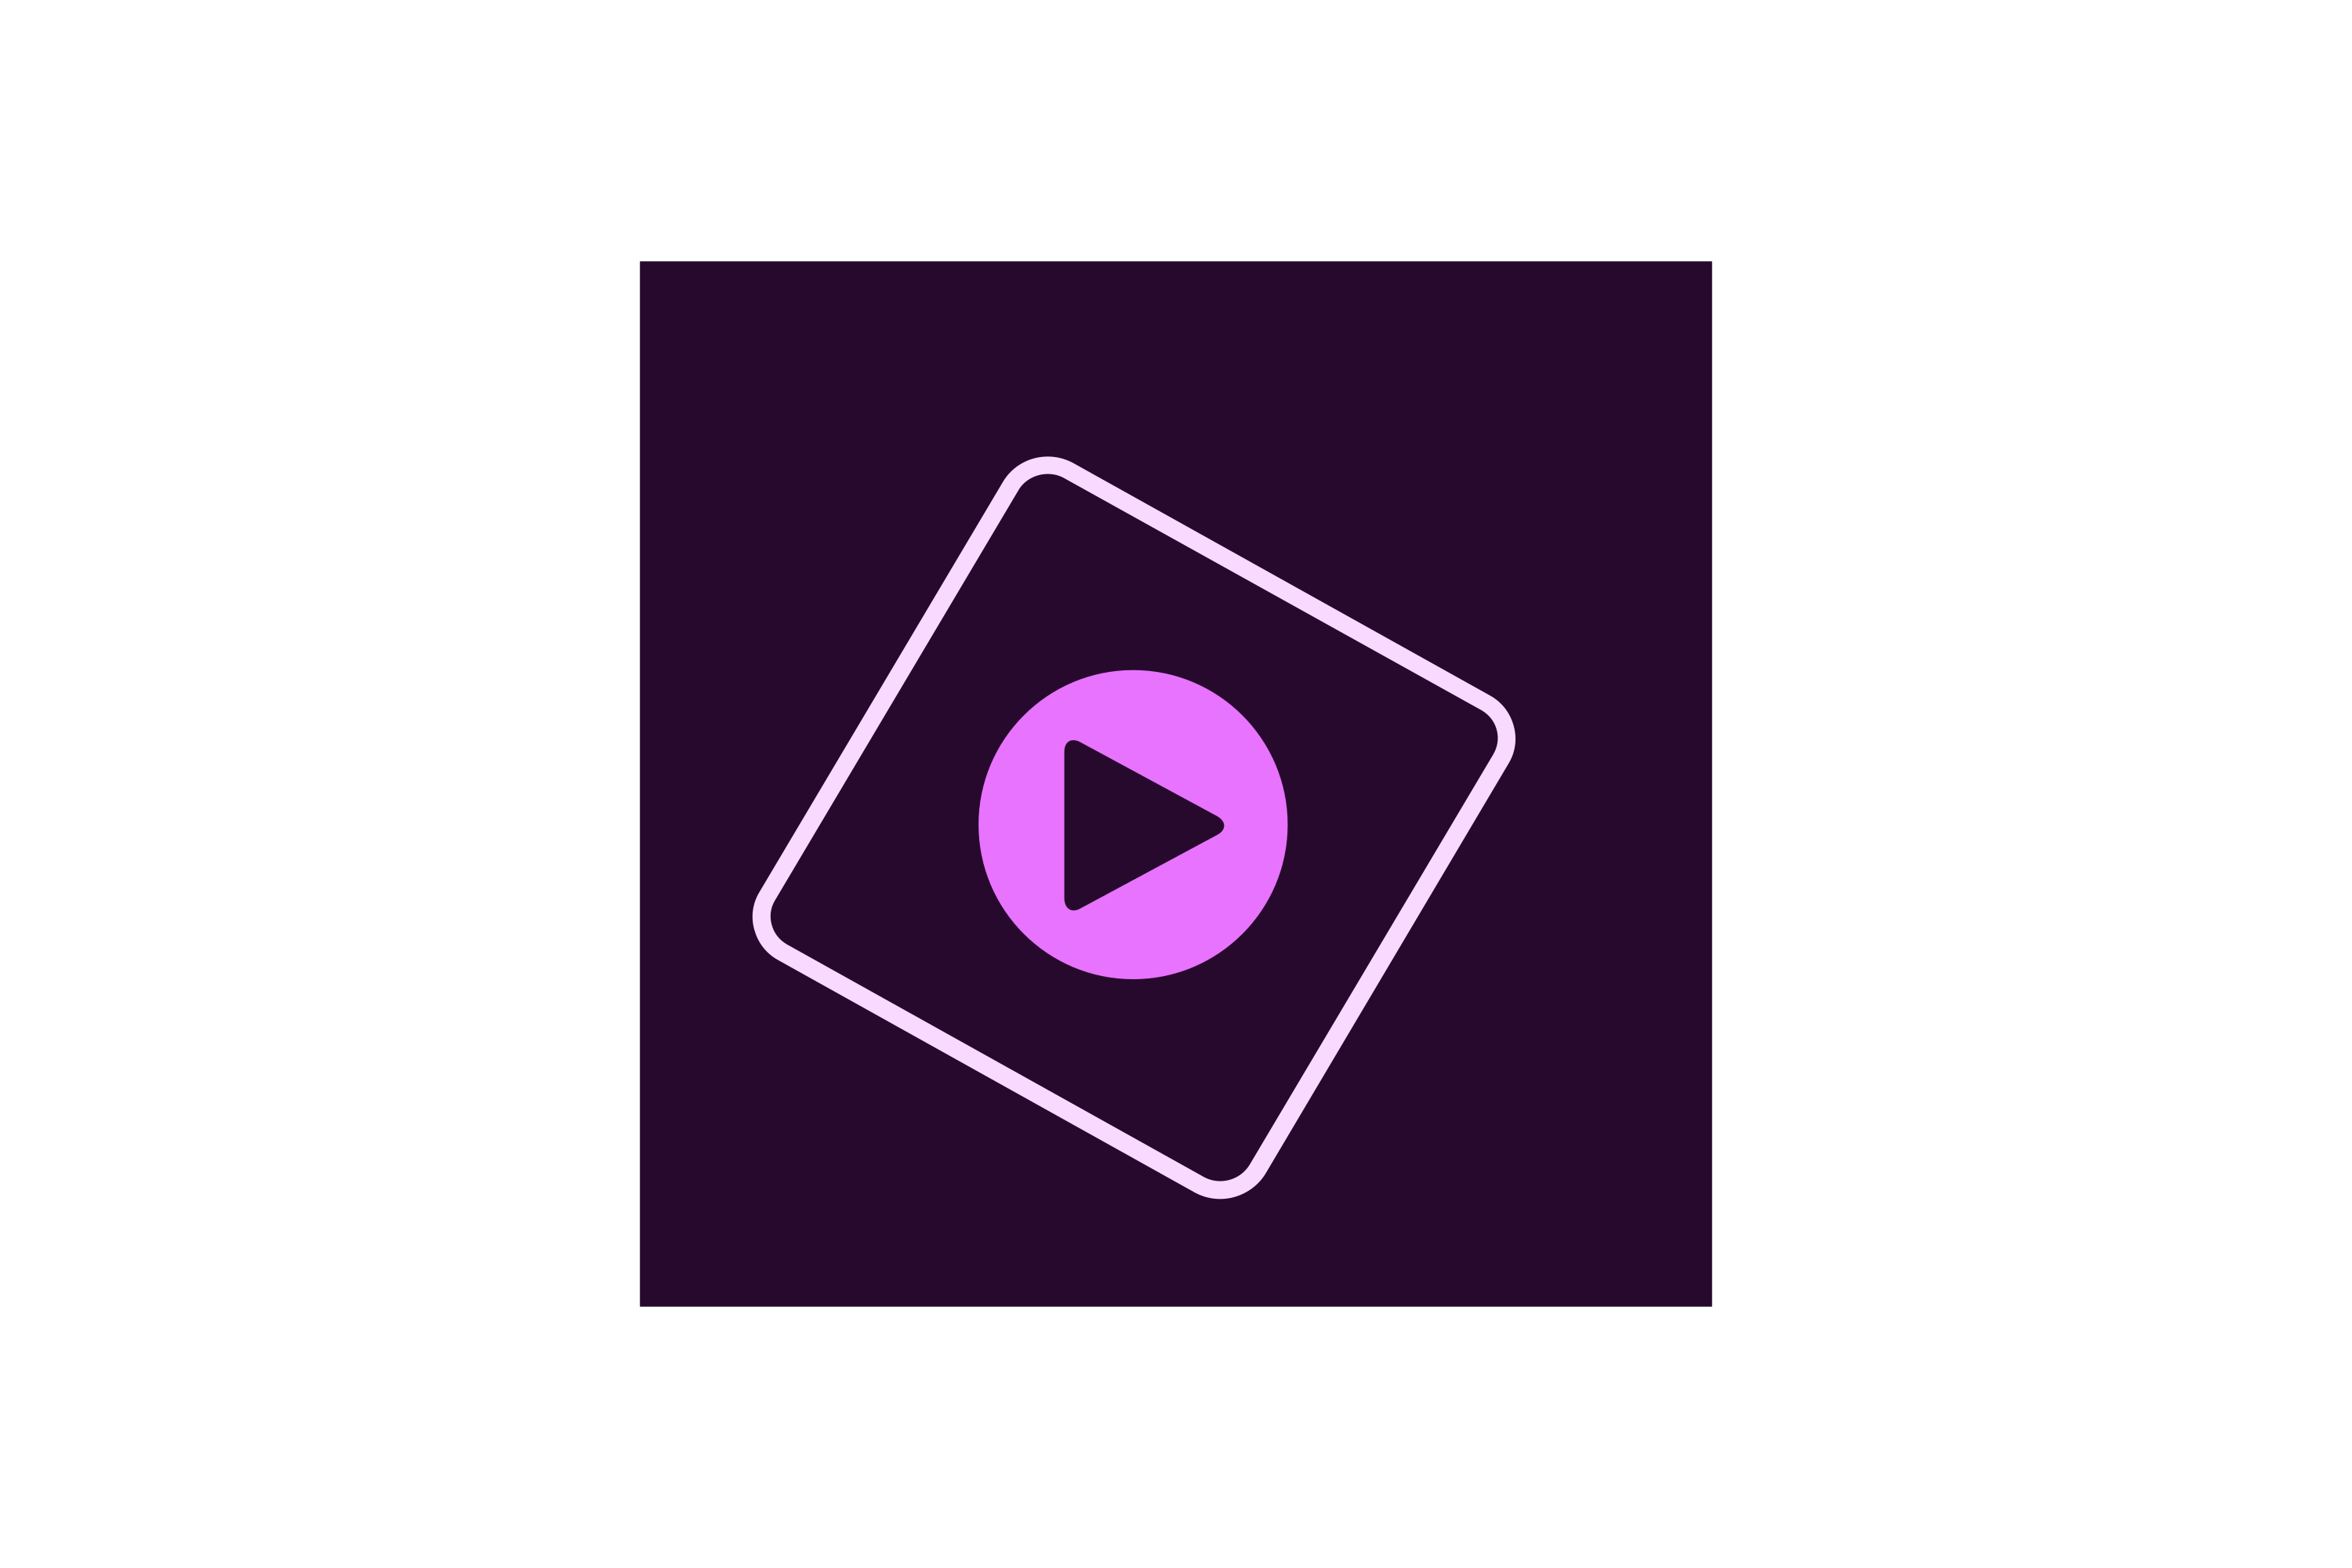 Download Adobe Premiere Elements Logo in SVG Vector or PNG File Format